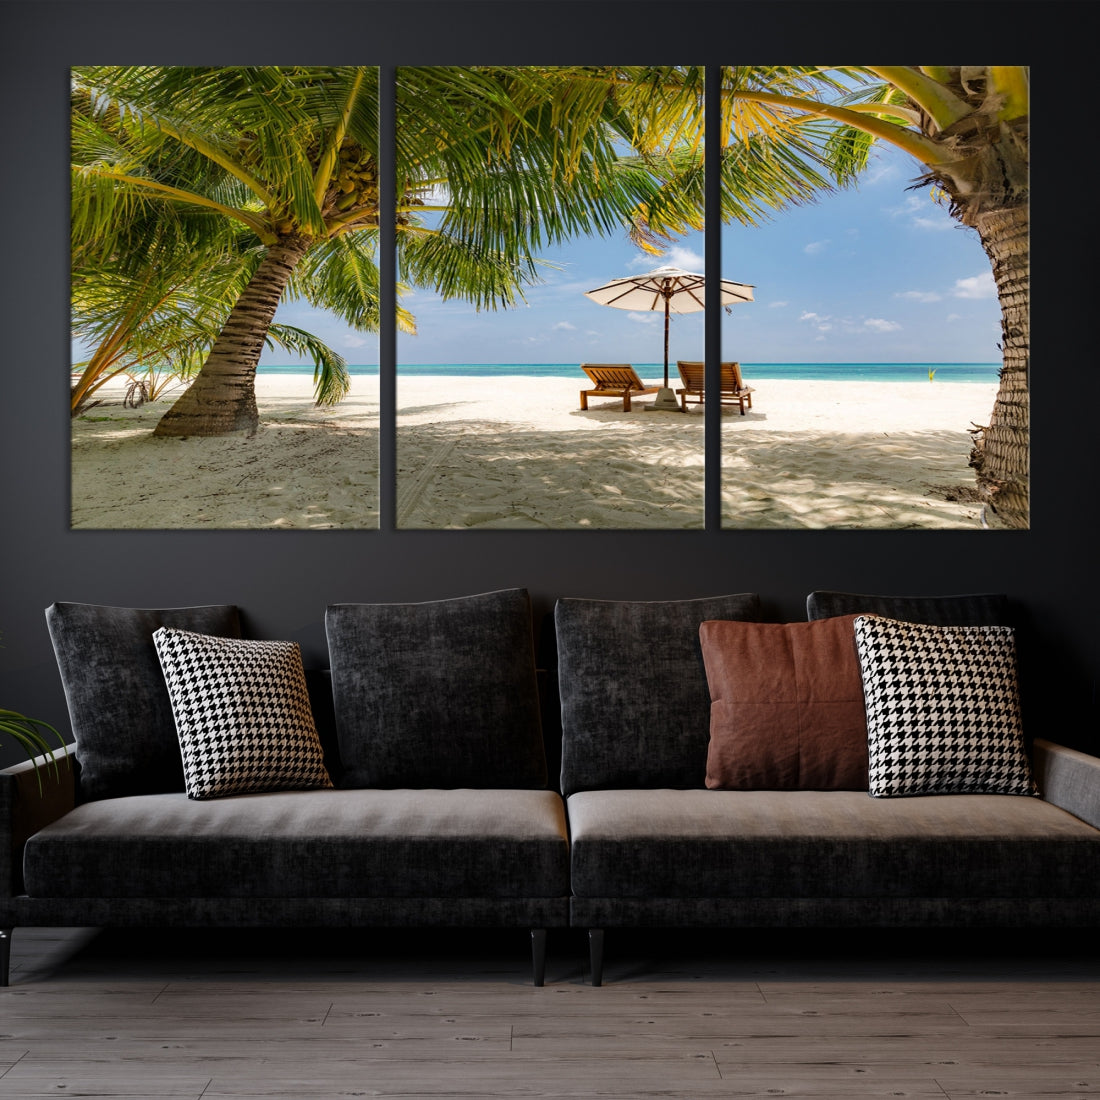 Lounge Chairs Palm Trees on Tropical Beach Canvas Wall Art Print Extra Large Beach Ocean Landscape Canvas Art